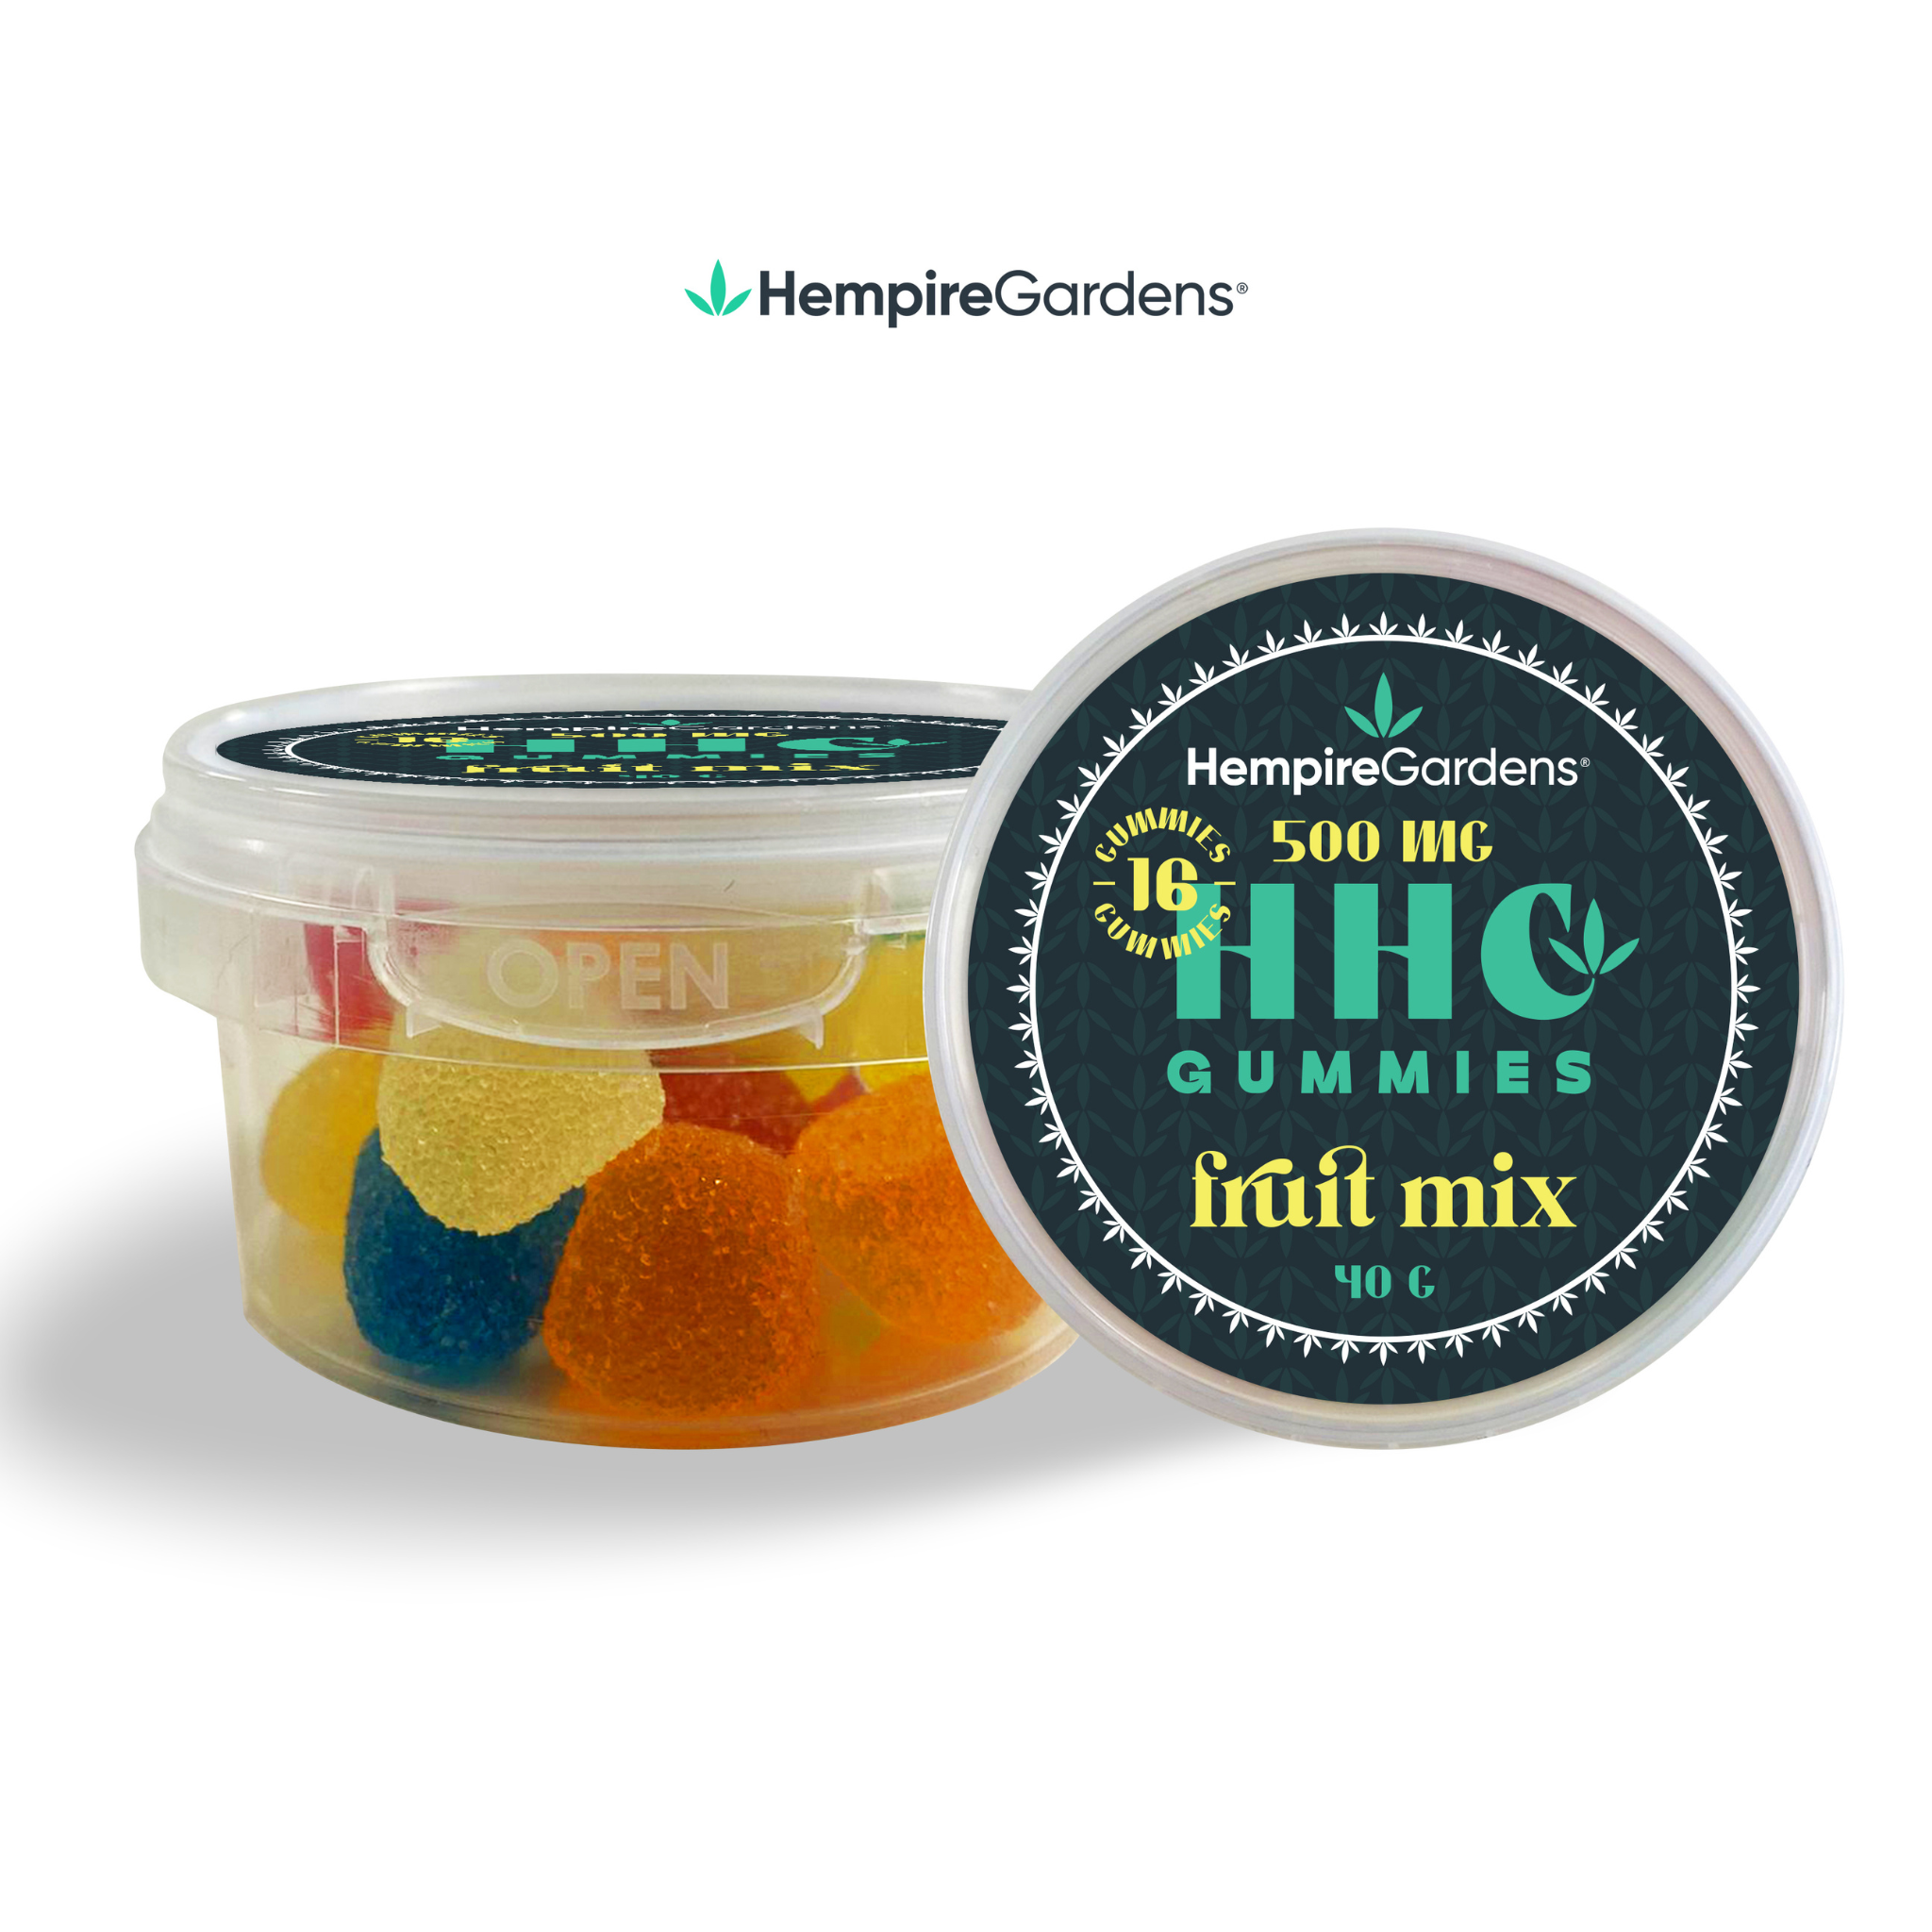 HHC Gummies I Fruit Mix